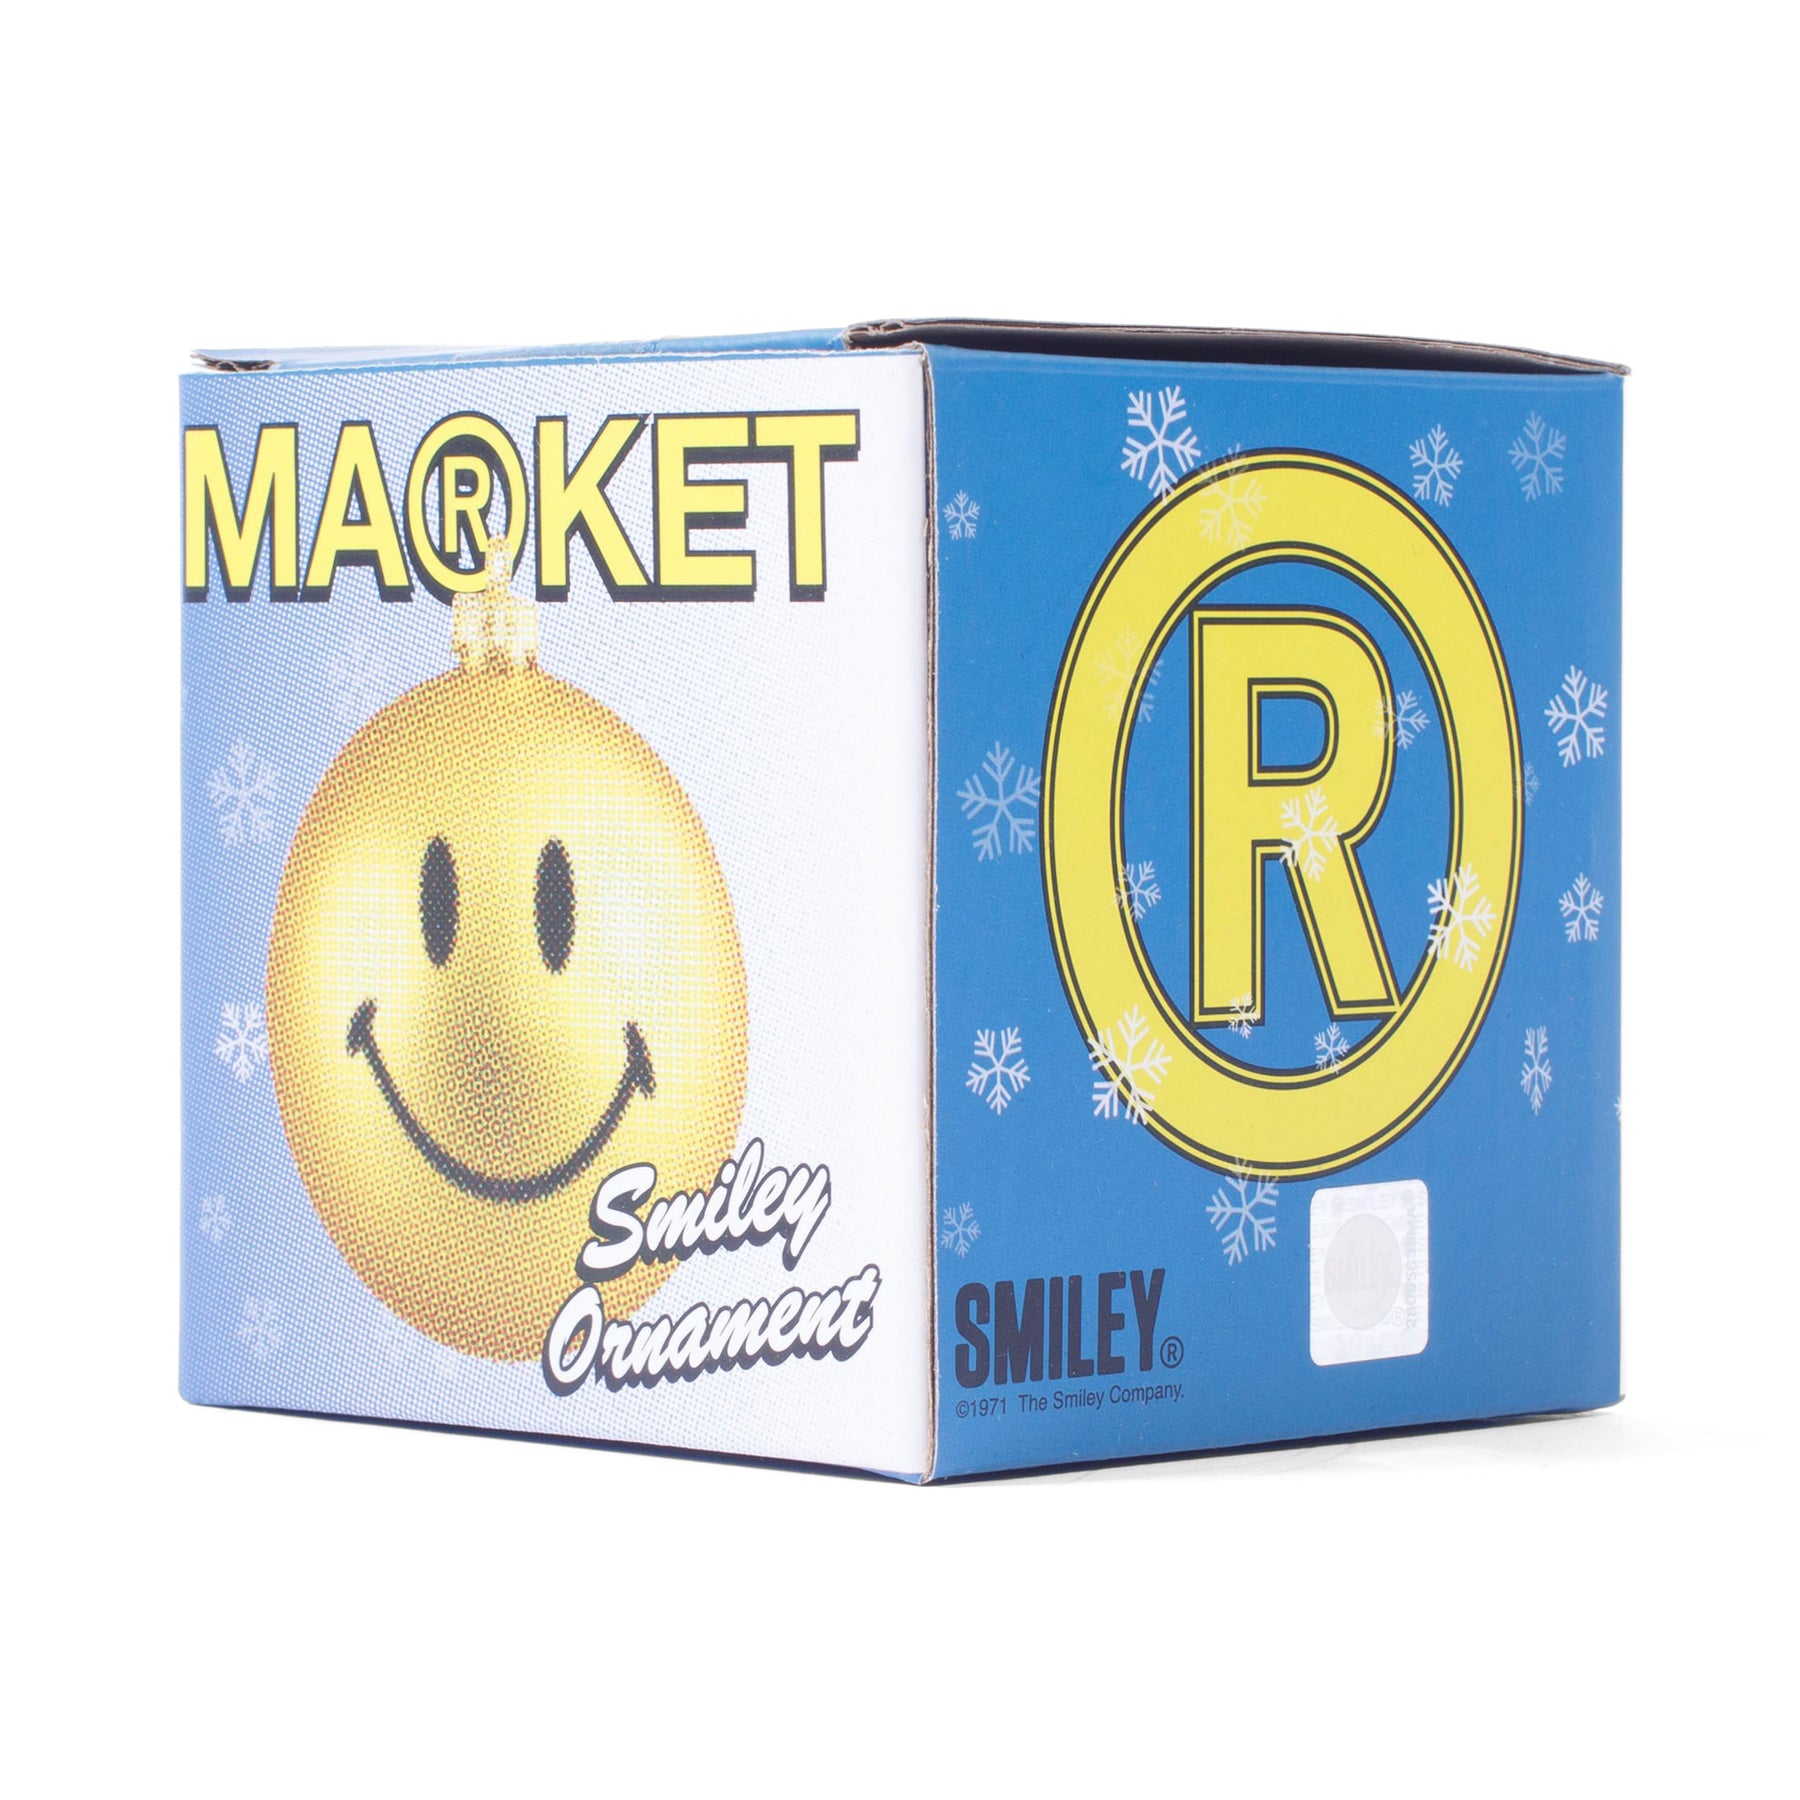 Market Smiley Ornament "Yellow"